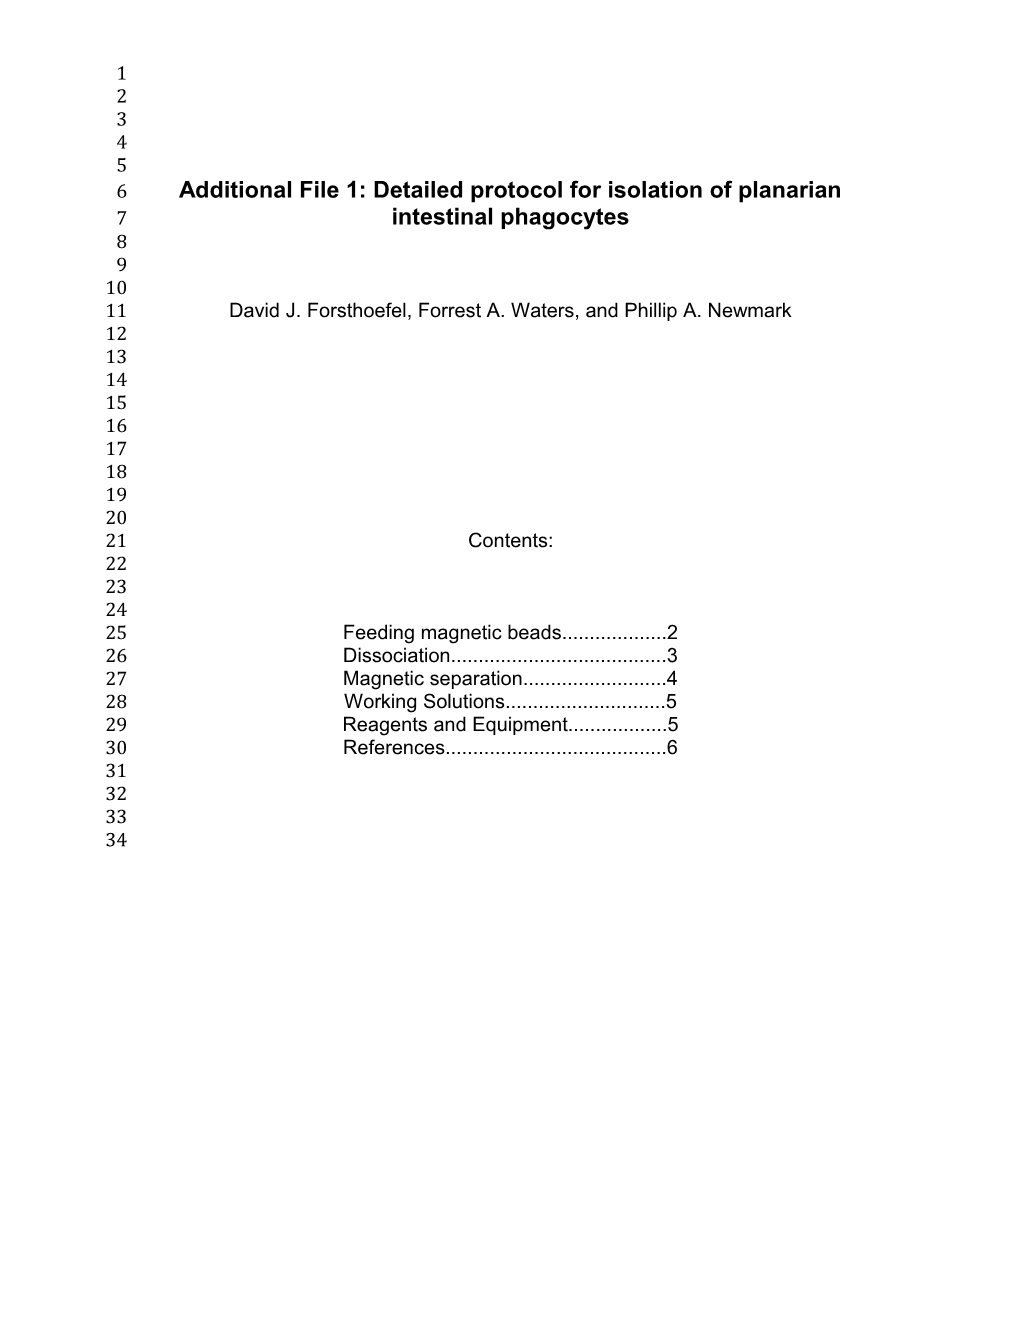 Additional File 1: Detailed Protocol for Isolation of Planarian Intestinal Phagocytes